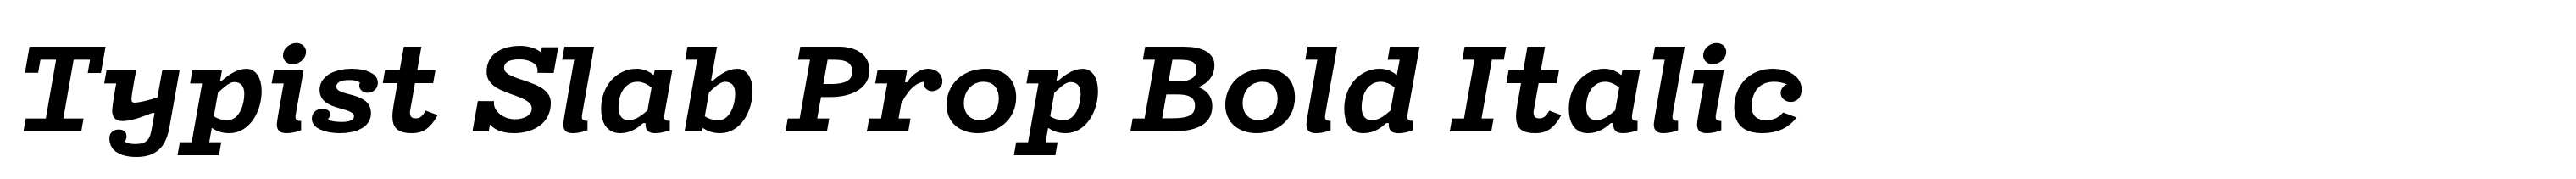 Typist Slab Prop Bold Italic